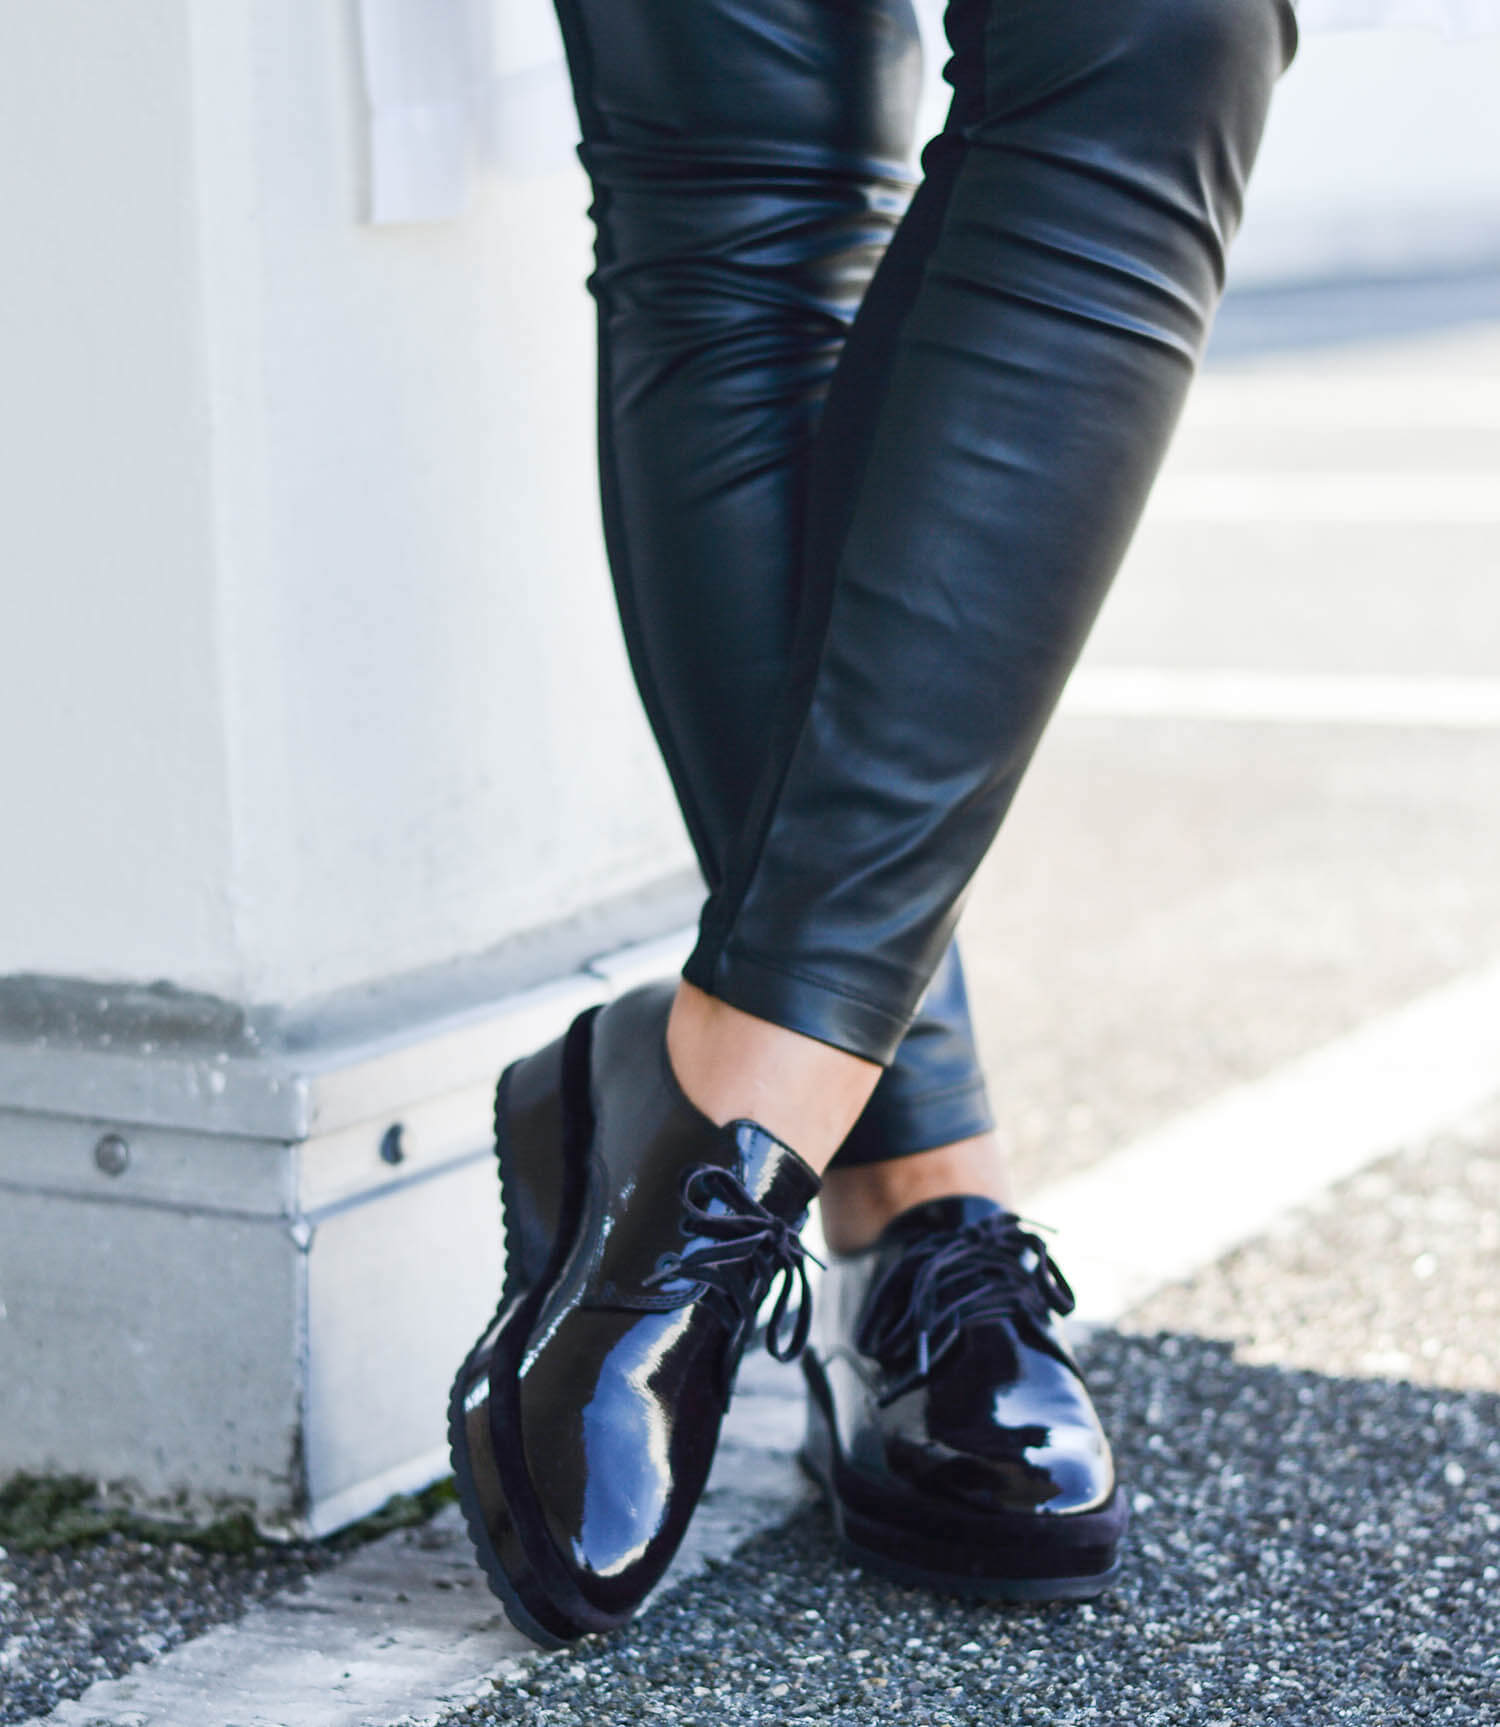 Kationette-fashionblog-nrw-Outfit-Tamaris-Platform-Shoes-Chanel-bag-Long-Blouse-and-Zara-Velvet-Jacket